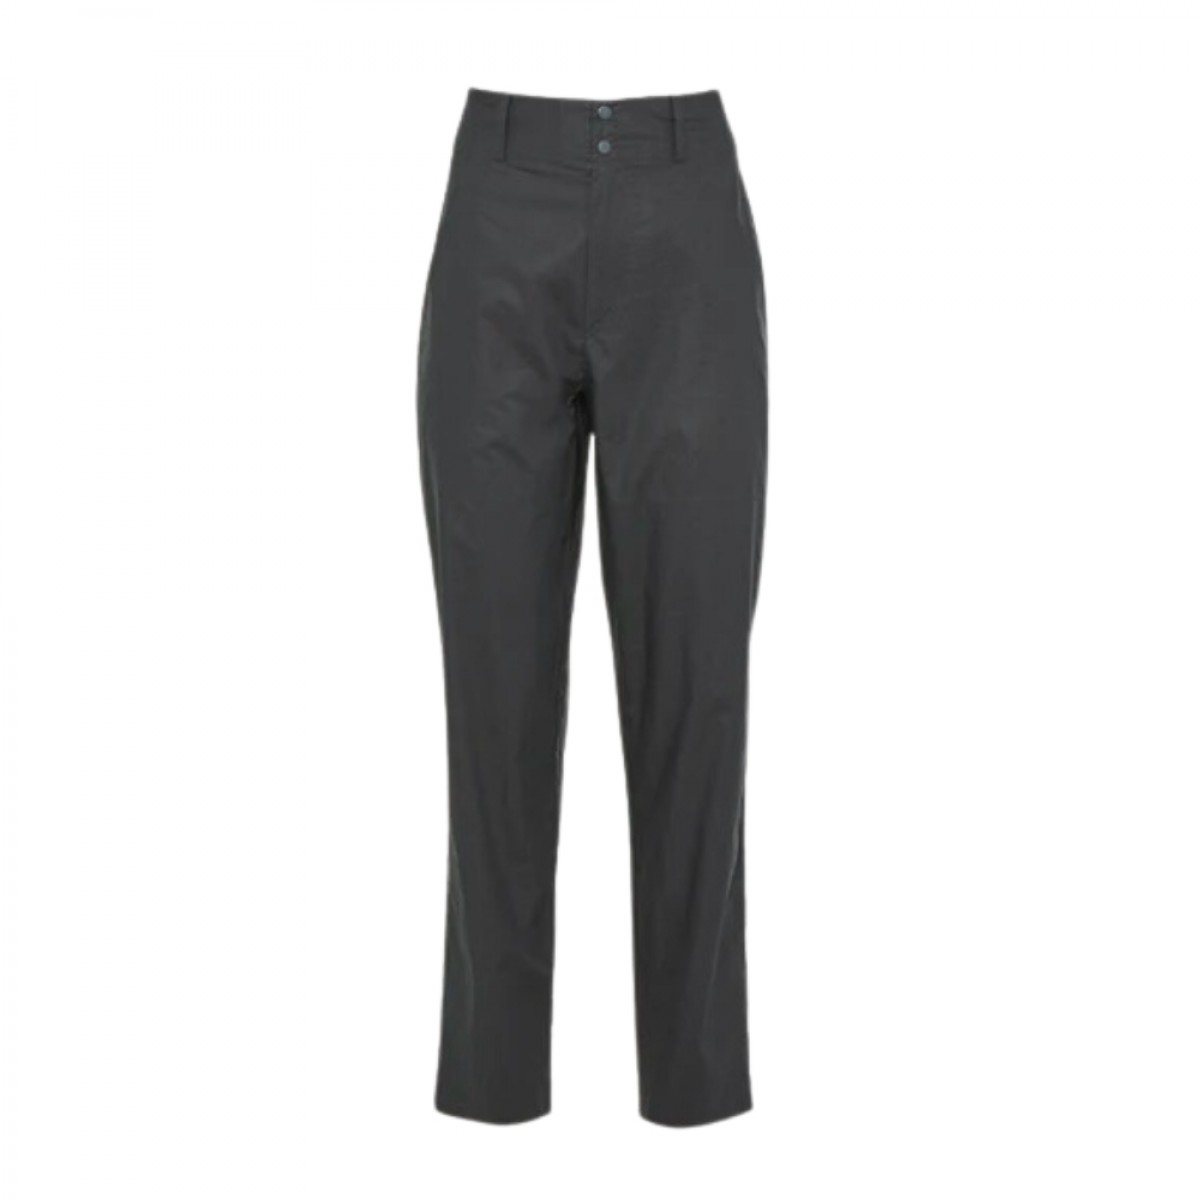 faliana pants - black - front